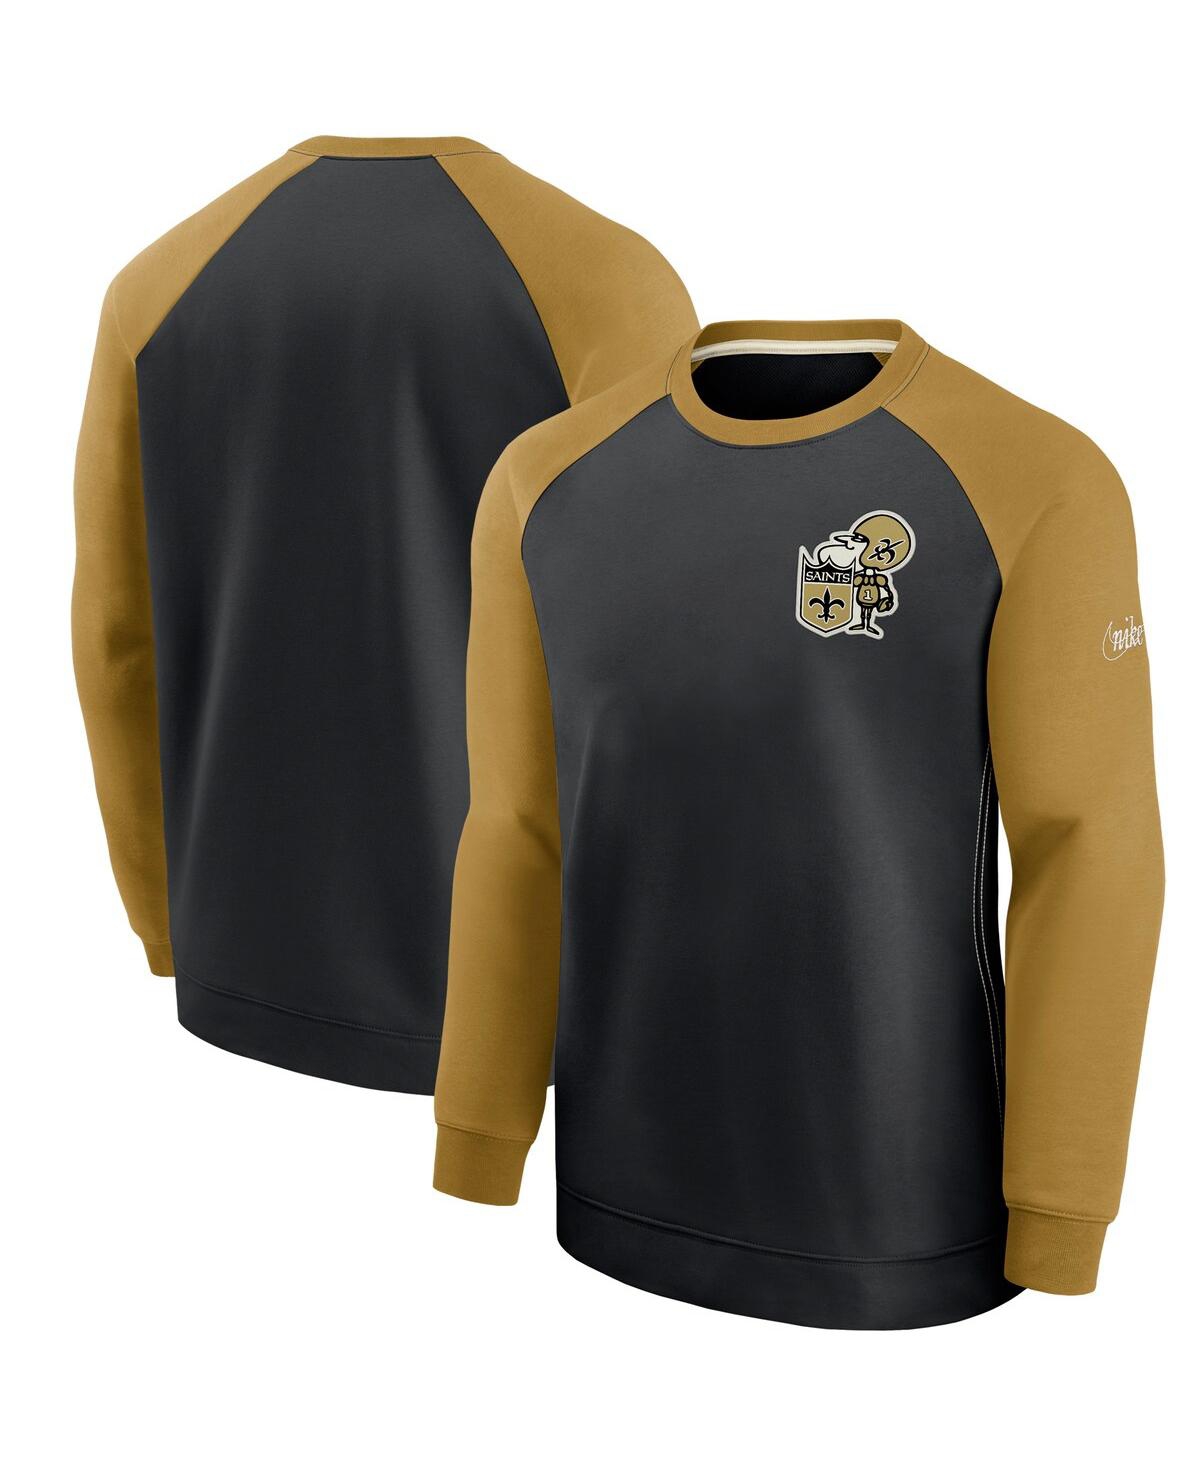 Men's Nike Black, Gold New Orleans Saints Historic Raglan Performance Pullover Sweater - Black, Gold